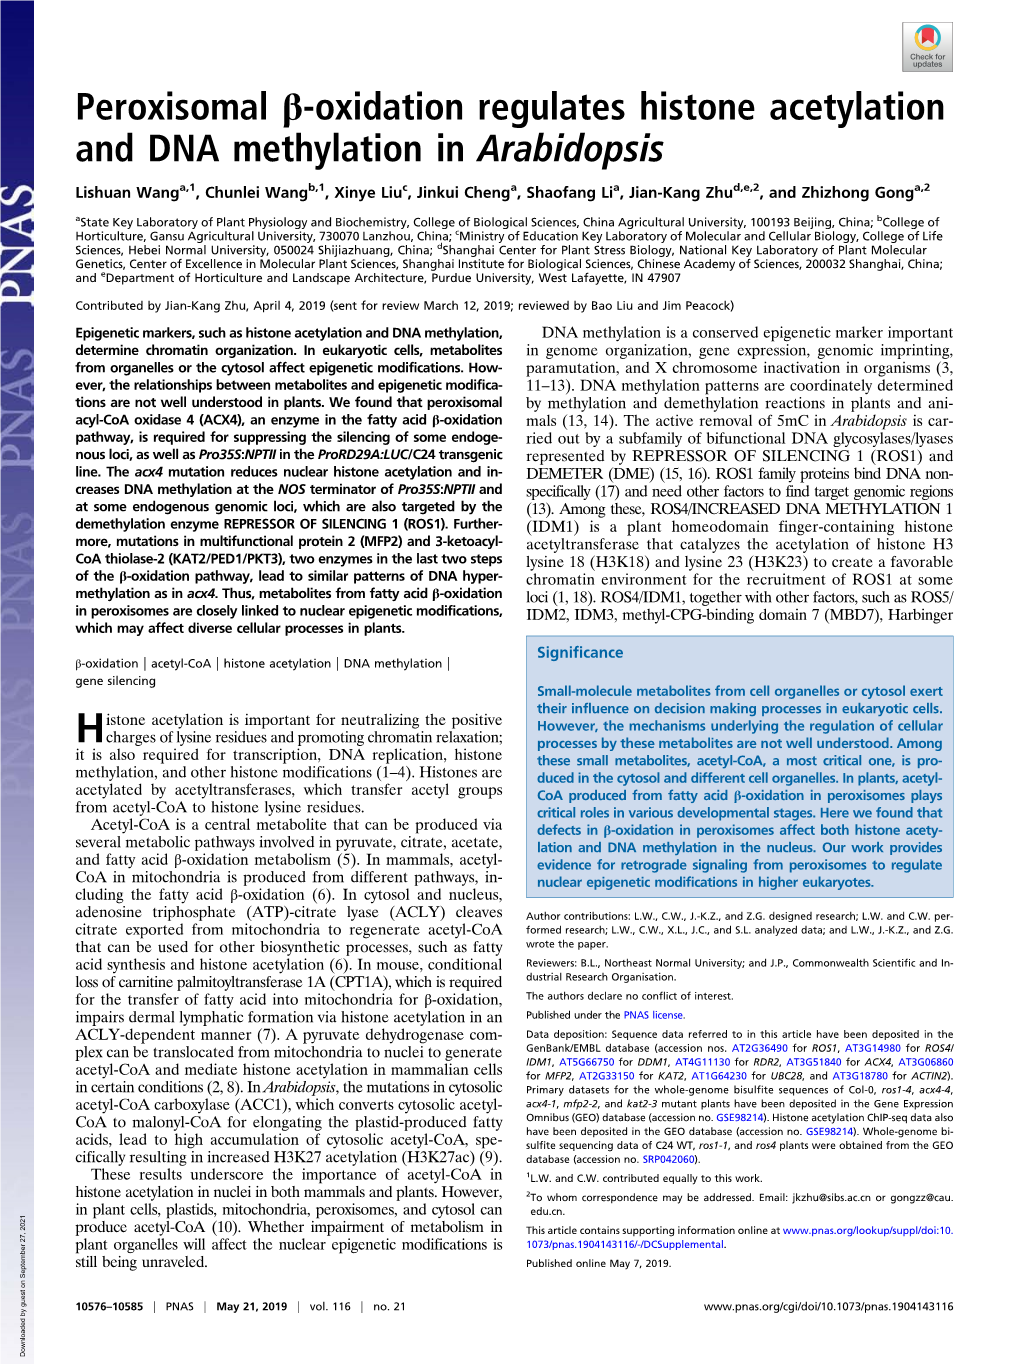 Peroxisomal Β-Oxidation Regulates Histone Acetylation and DNA Methylation in Arabidopsis